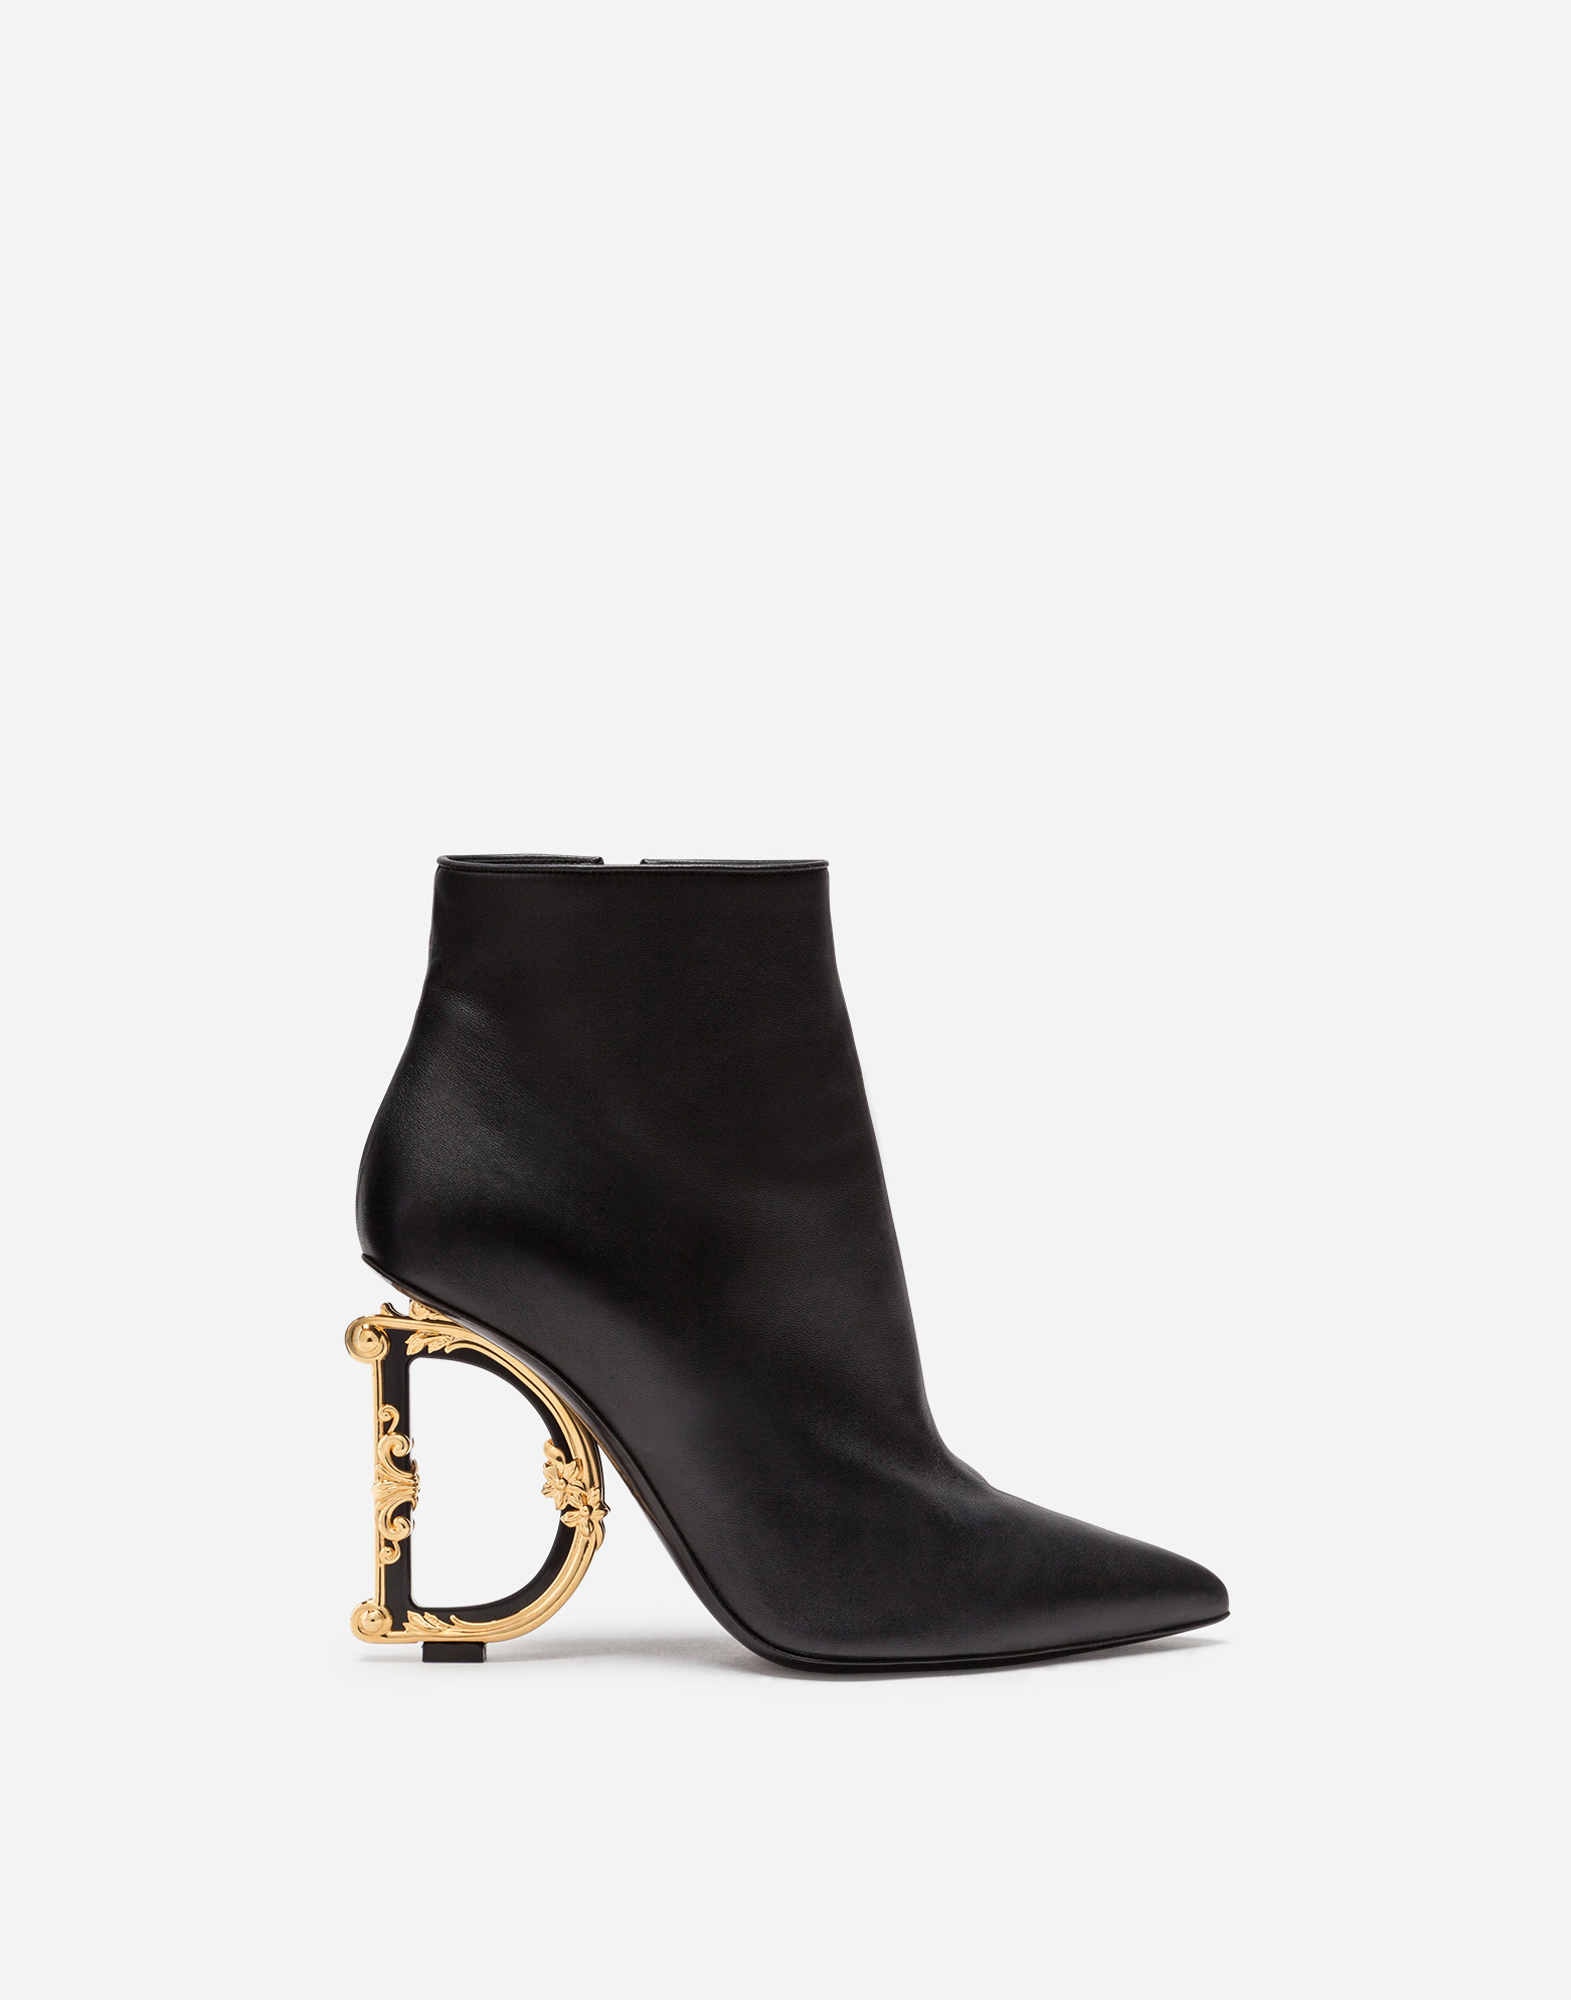 Nappa leather booties with baroque D\u0026G heel